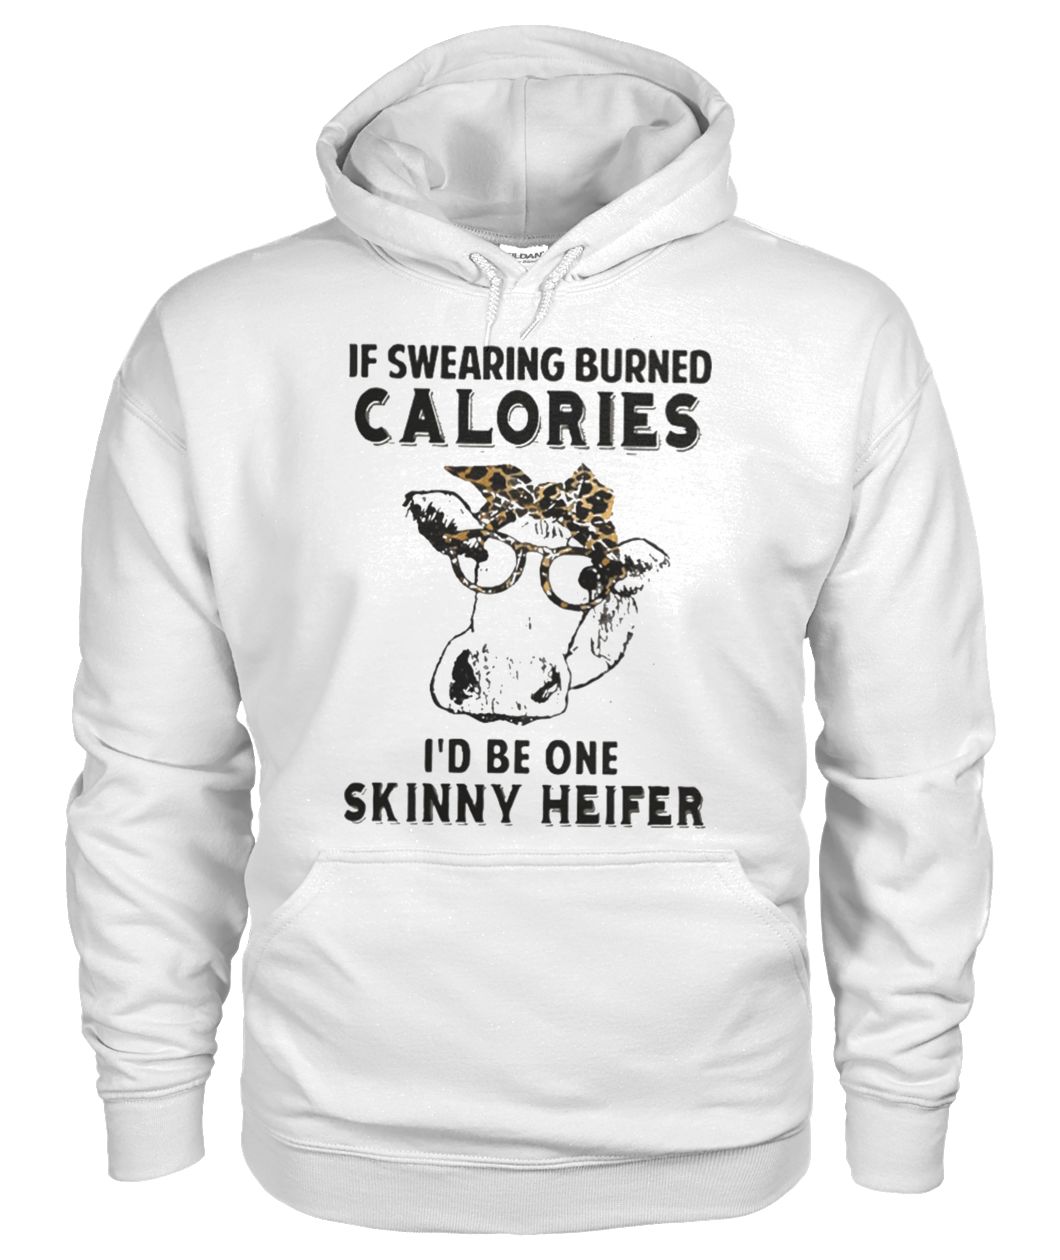 If swearing burned calories I'd be one skinny heifer gildan hoodie